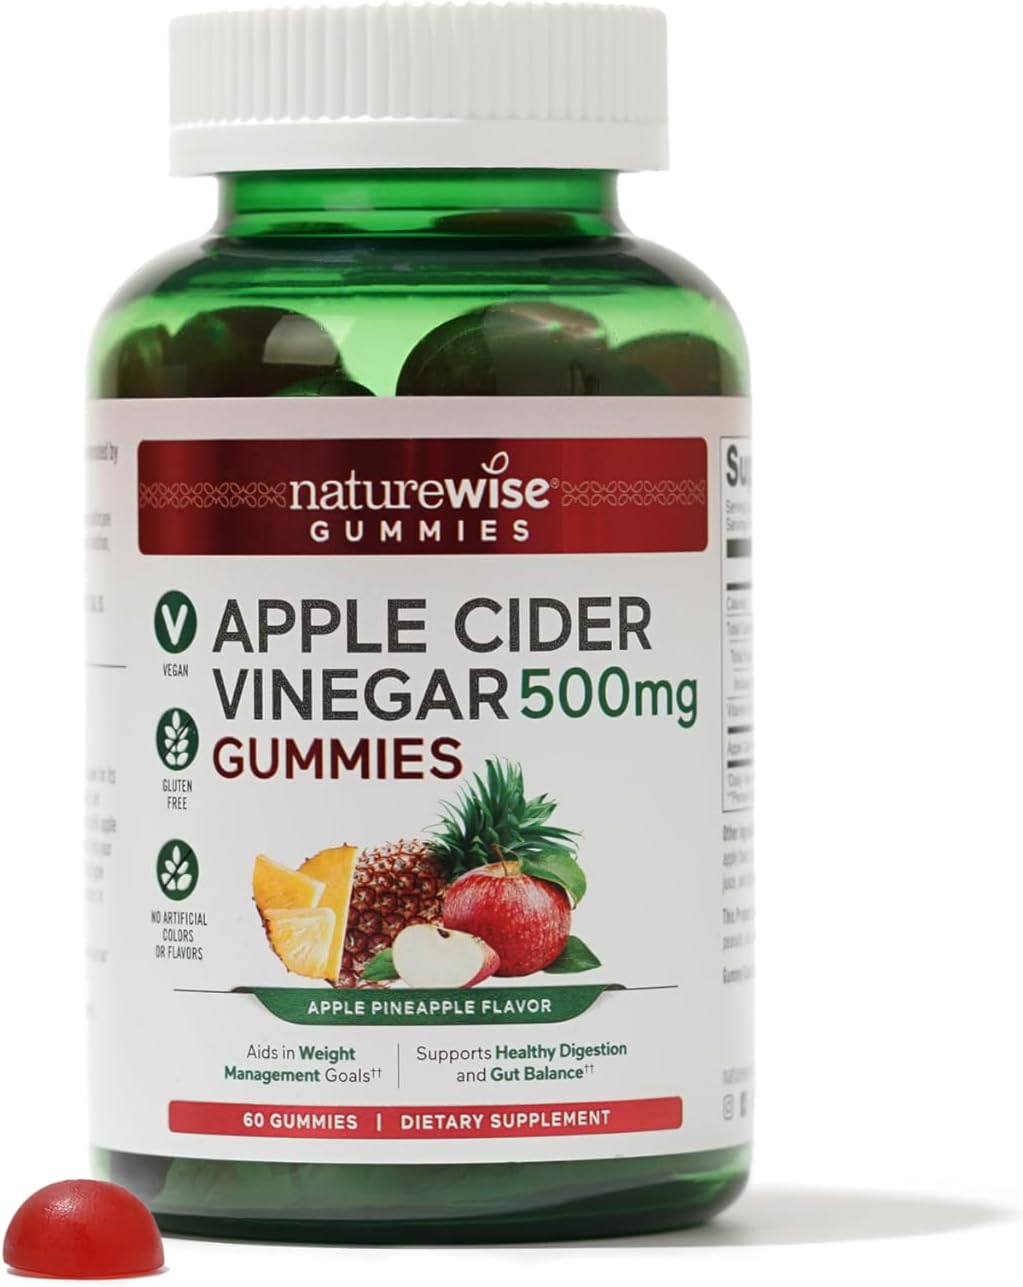 NatureWise Apple Cider Vinegar Gummies - 500mg ACV Gummies with Vitamin B12 - Apple-Pineapple Flavor - Support for Energy & Gut Health - Vegan, Gluten-Free, Non-GMO - 60 Gummies[2-Month Supply]